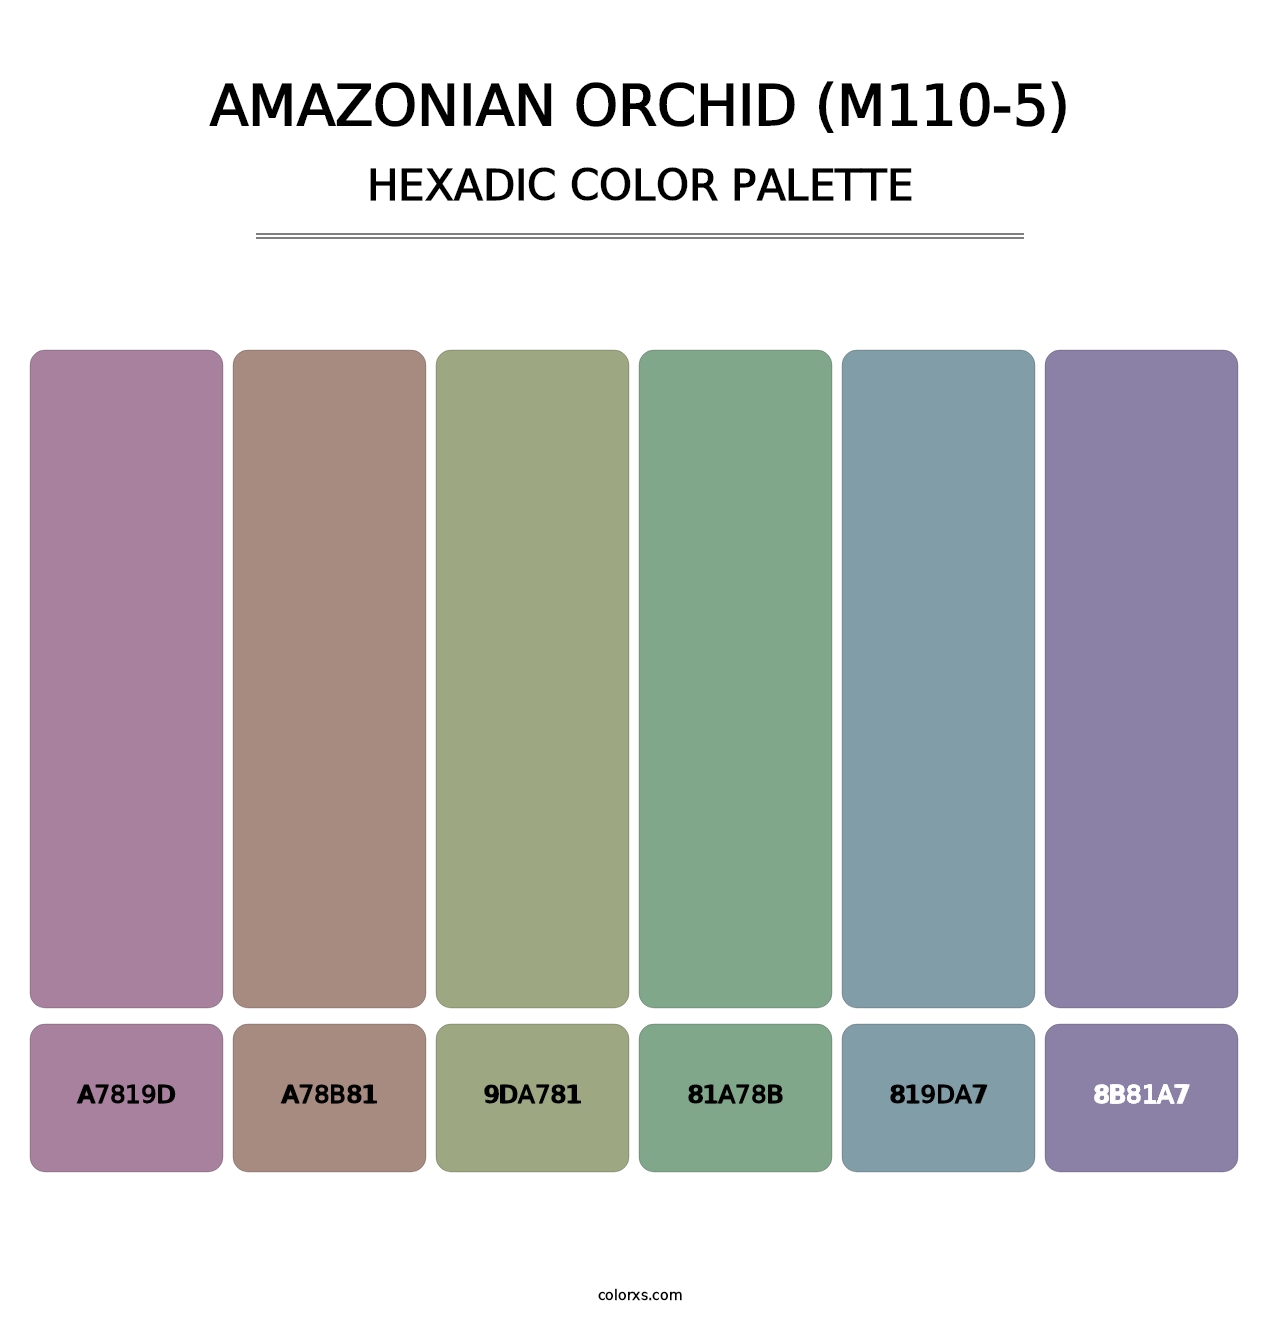 Amazonian Orchid (M110-5) - Hexadic Color Palette